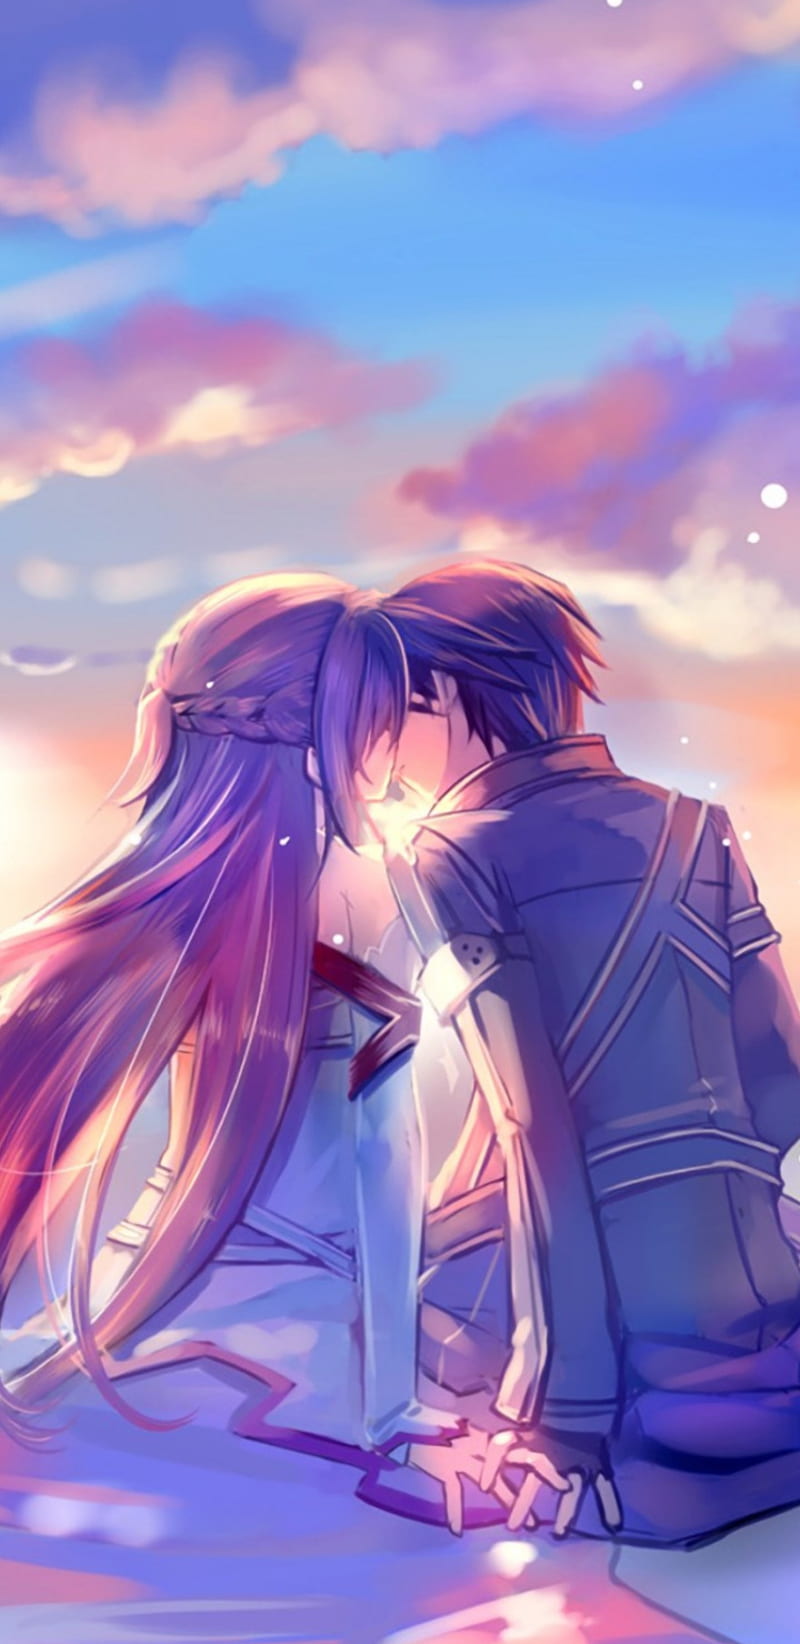 Cute anime couple kissing